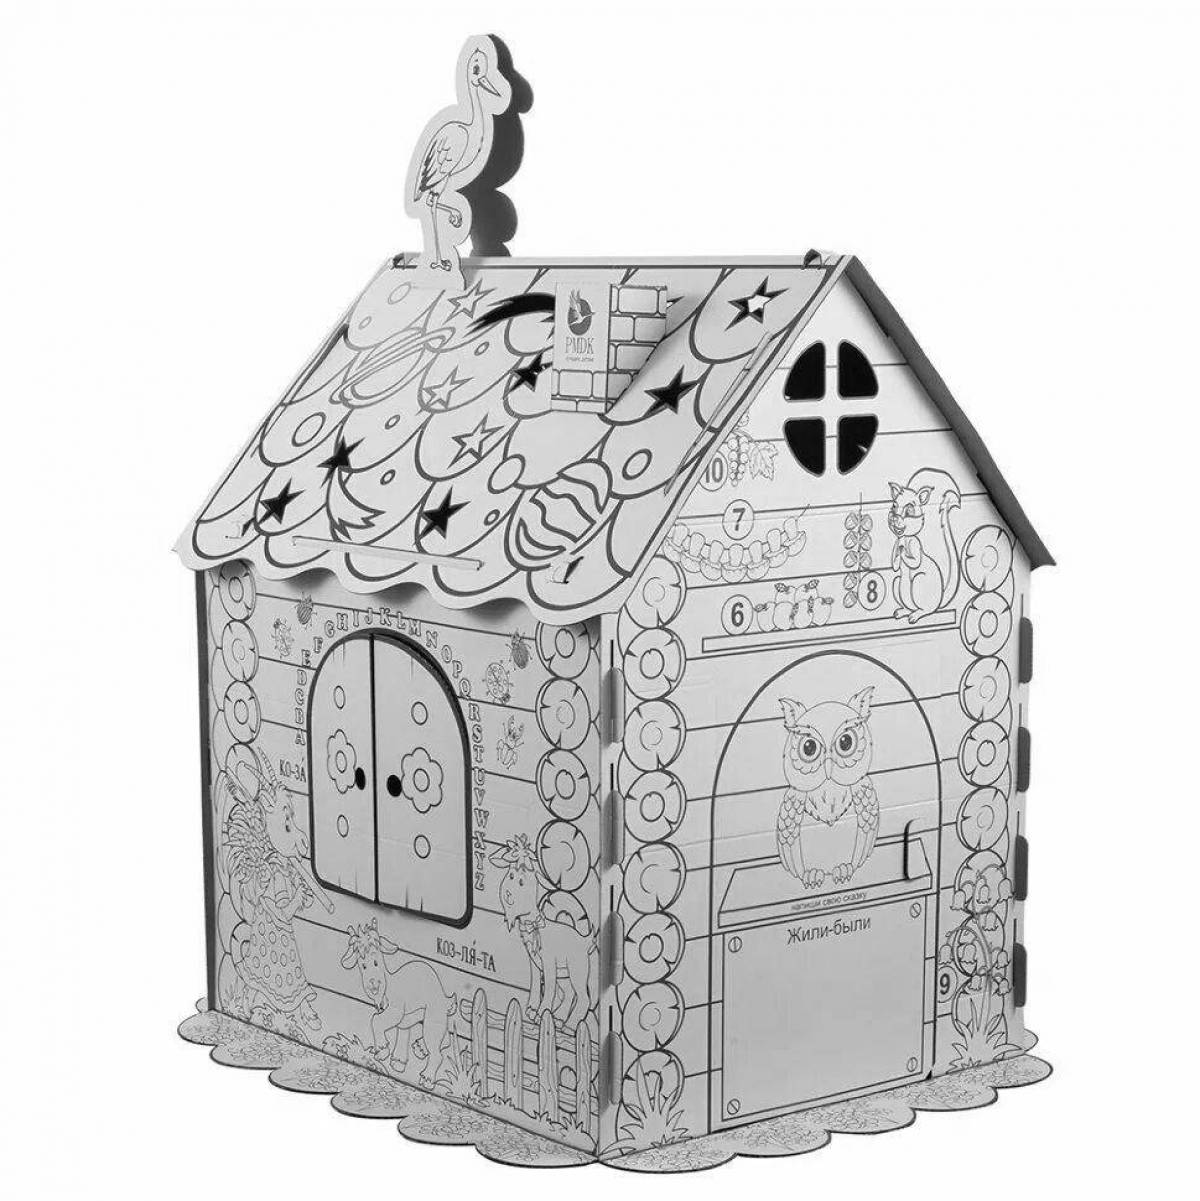 Cardboard playhouse #7